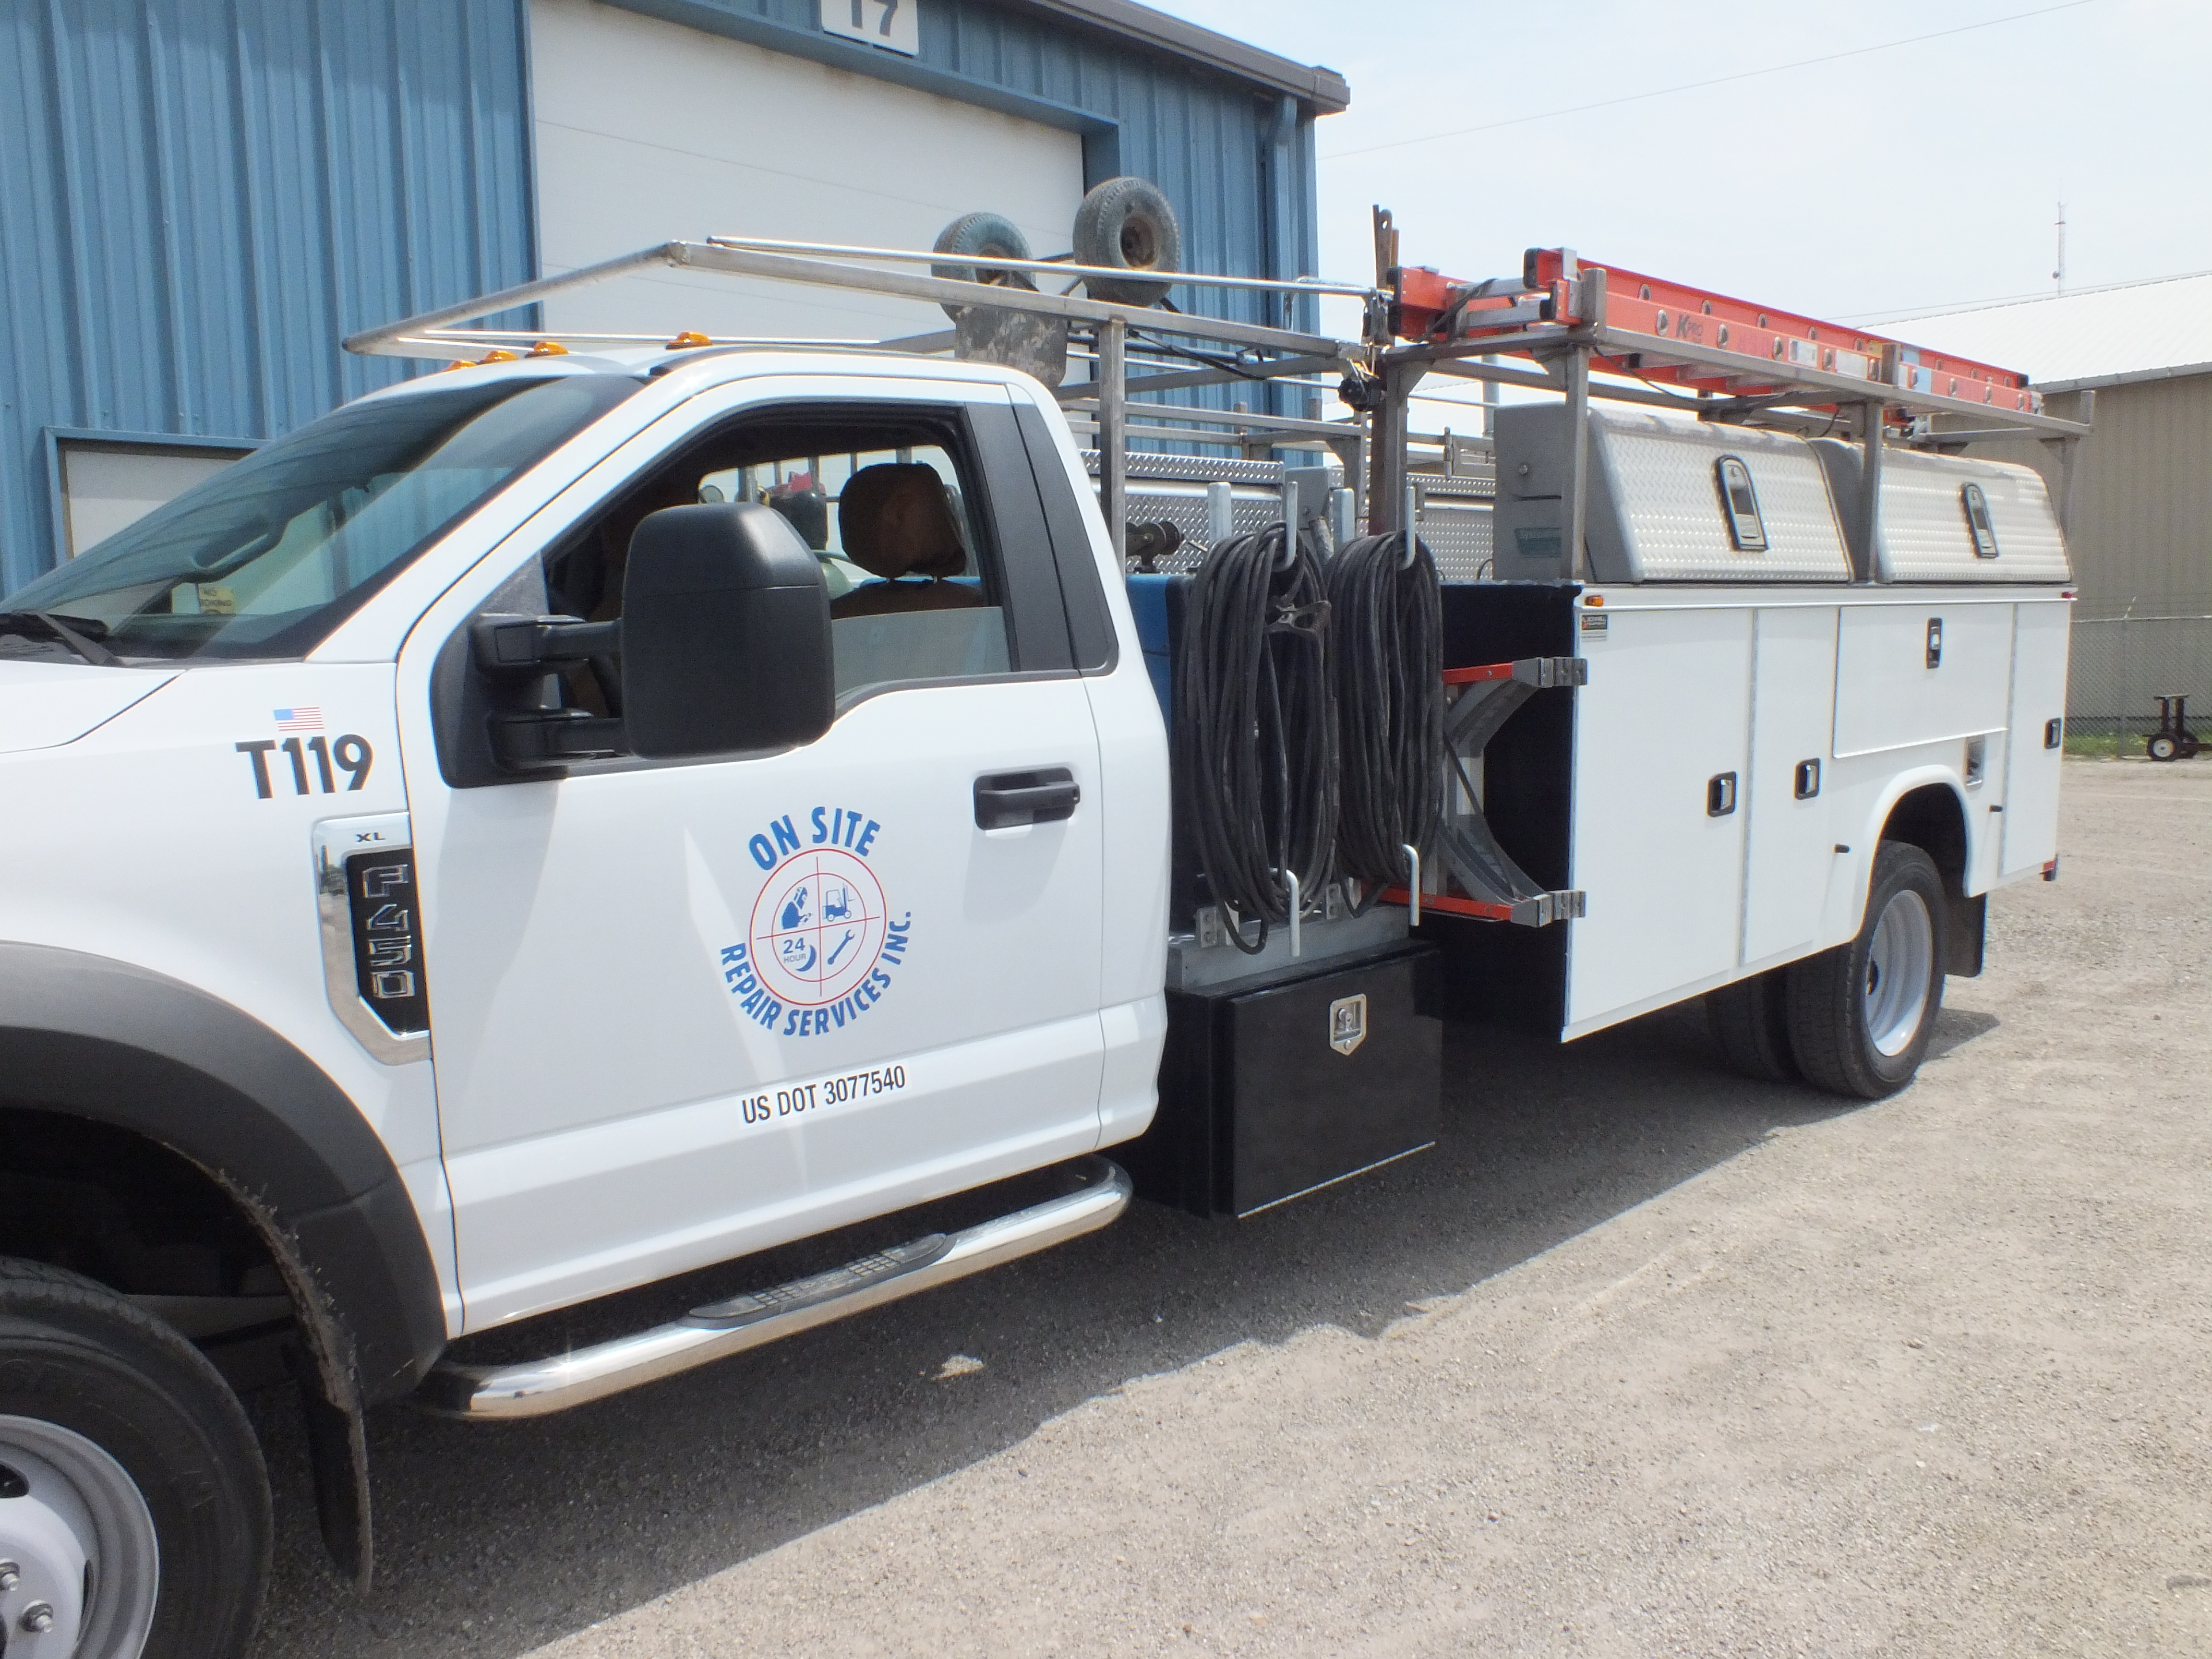 On Site Repair service truck fleet